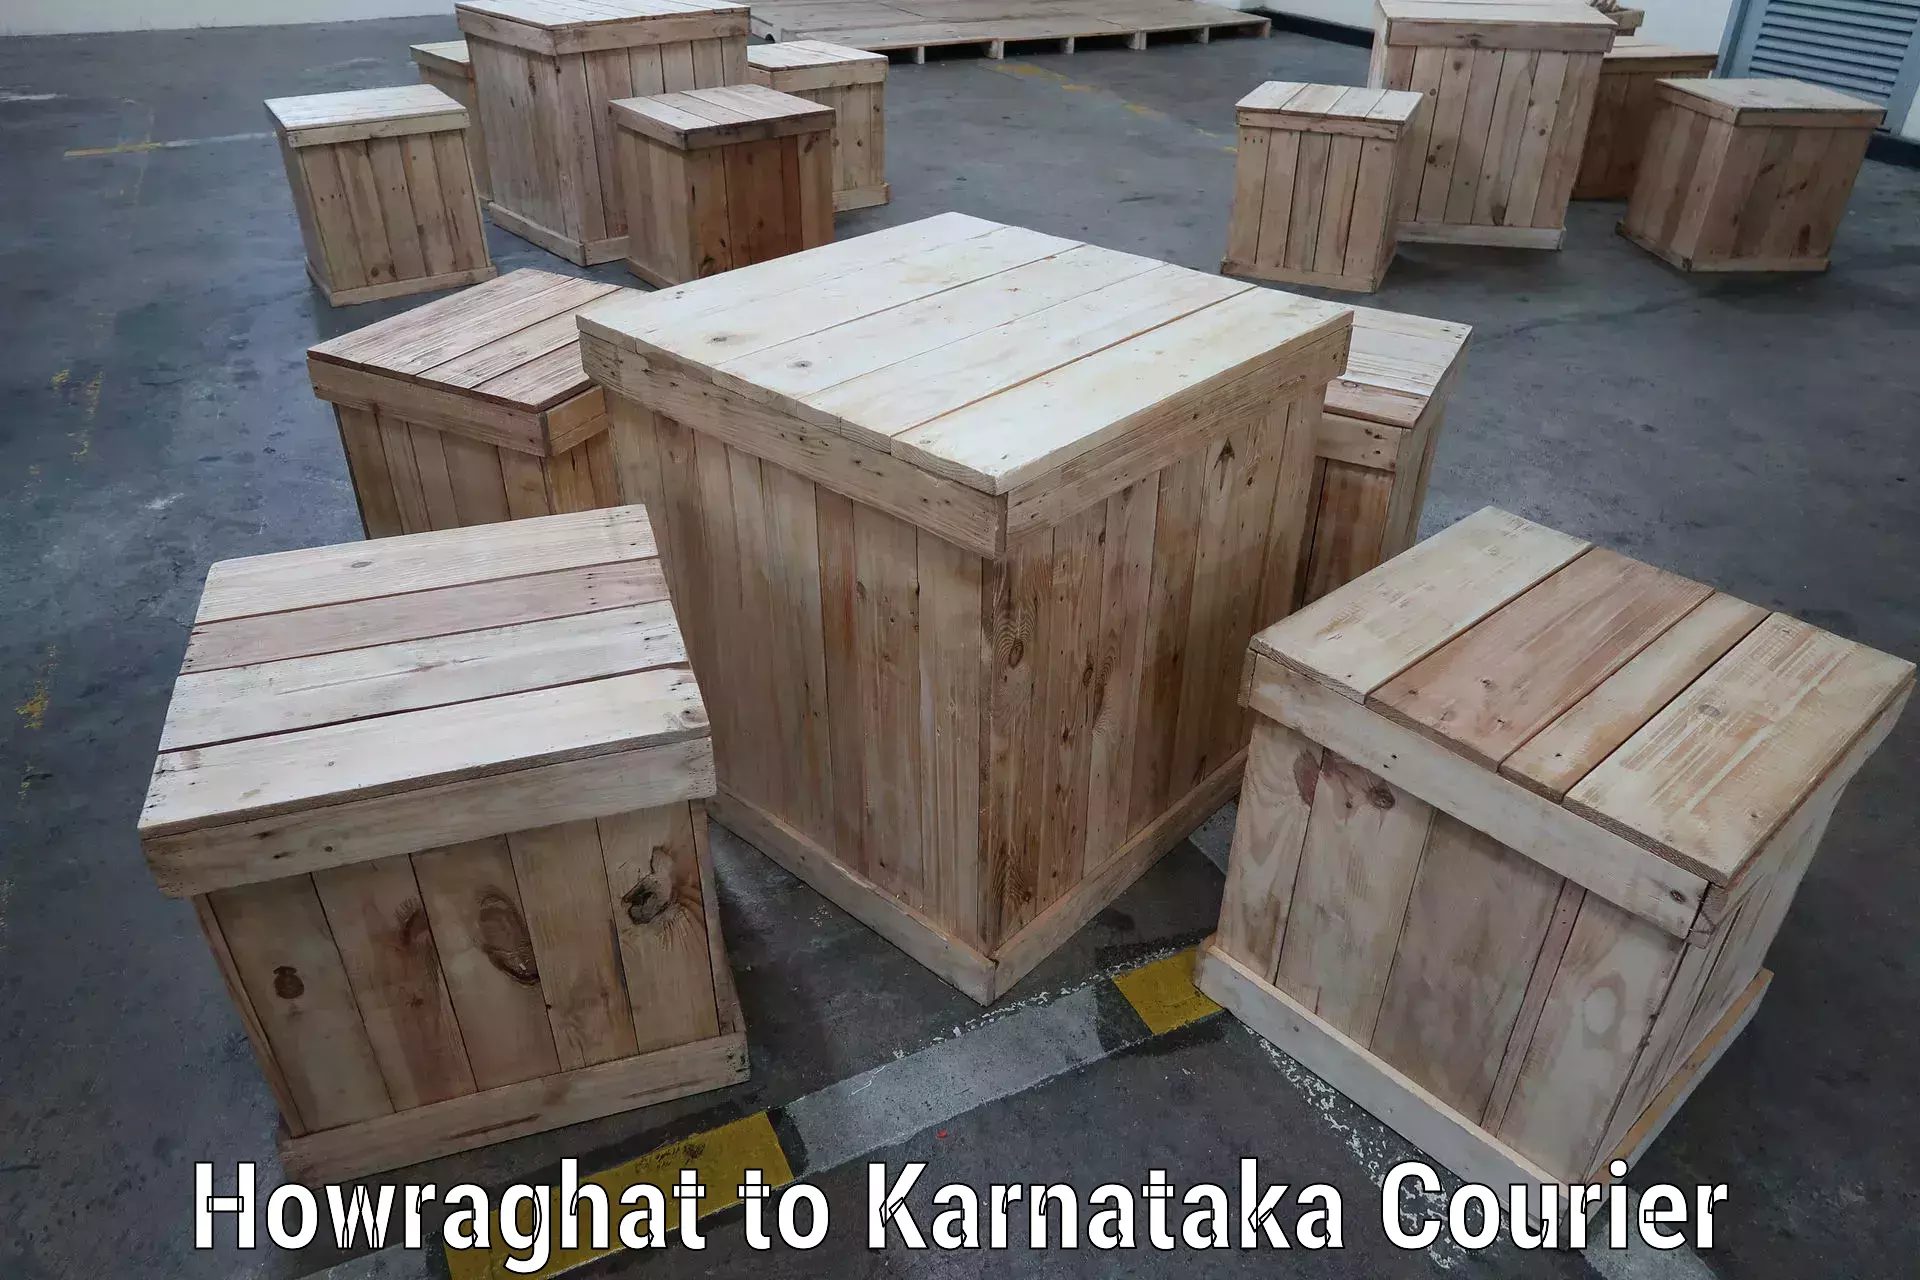 Smart logistics solutions Howraghat to Karnataka